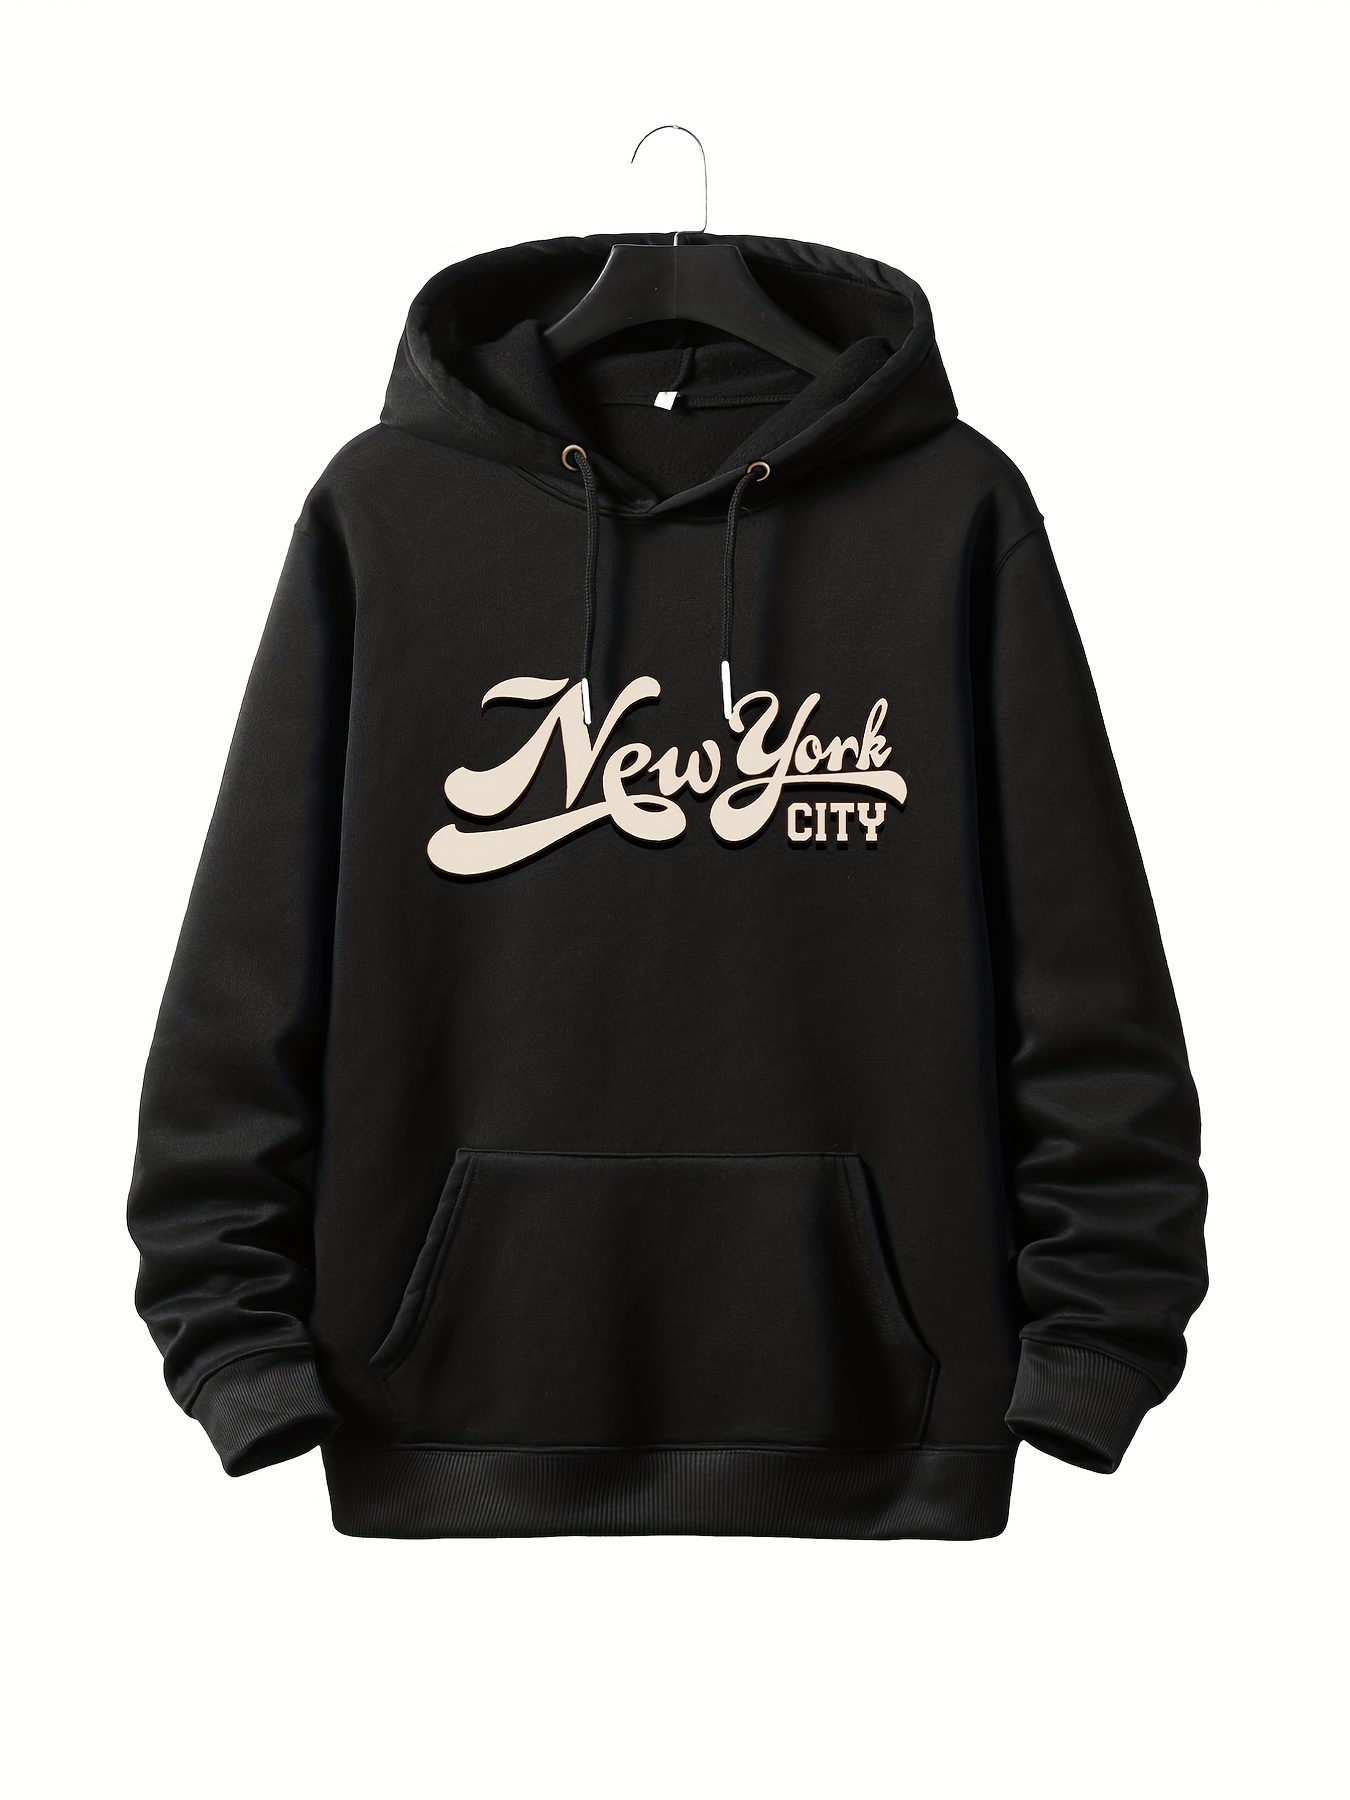 Plus New York Sweatshirt